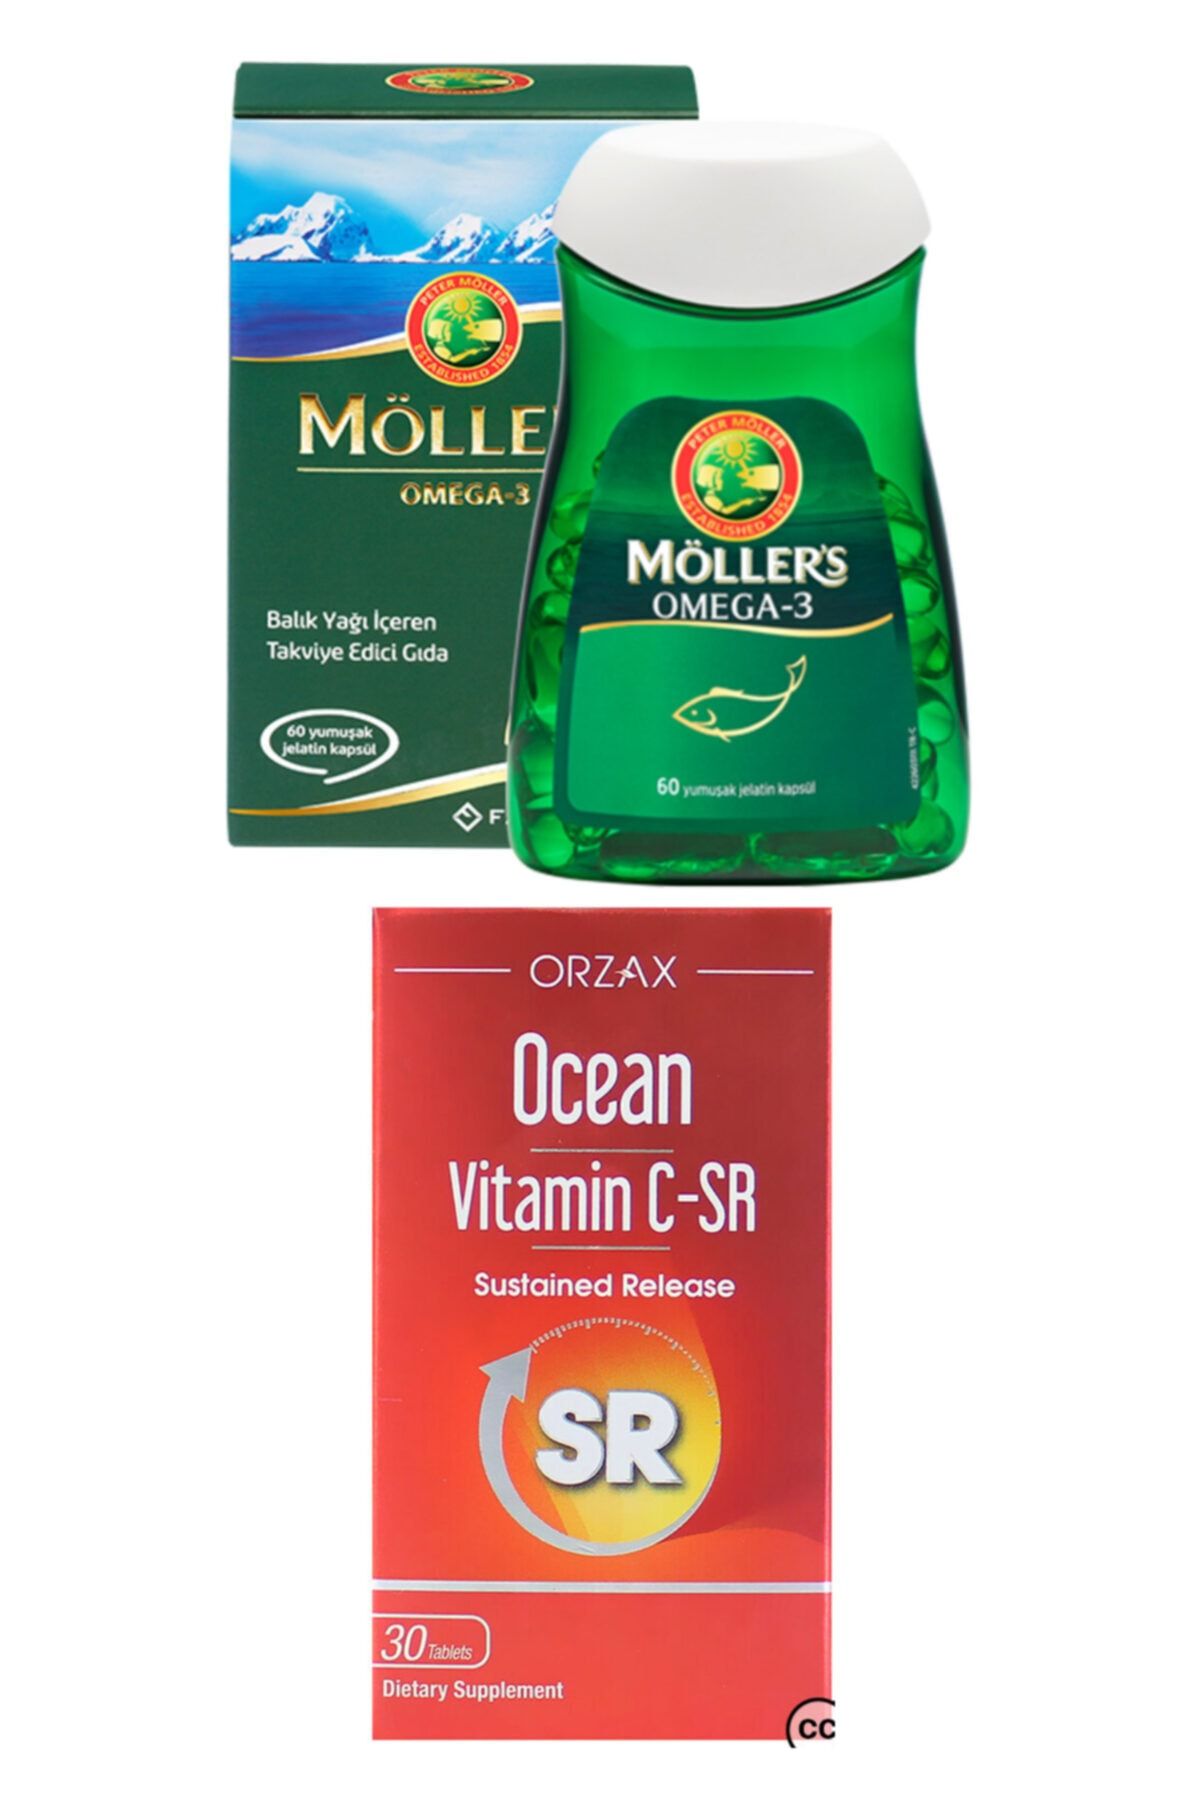 Mollers Omega 3 60 Kapsül Ve Ocean Vitamin C-sr 30 Tablet